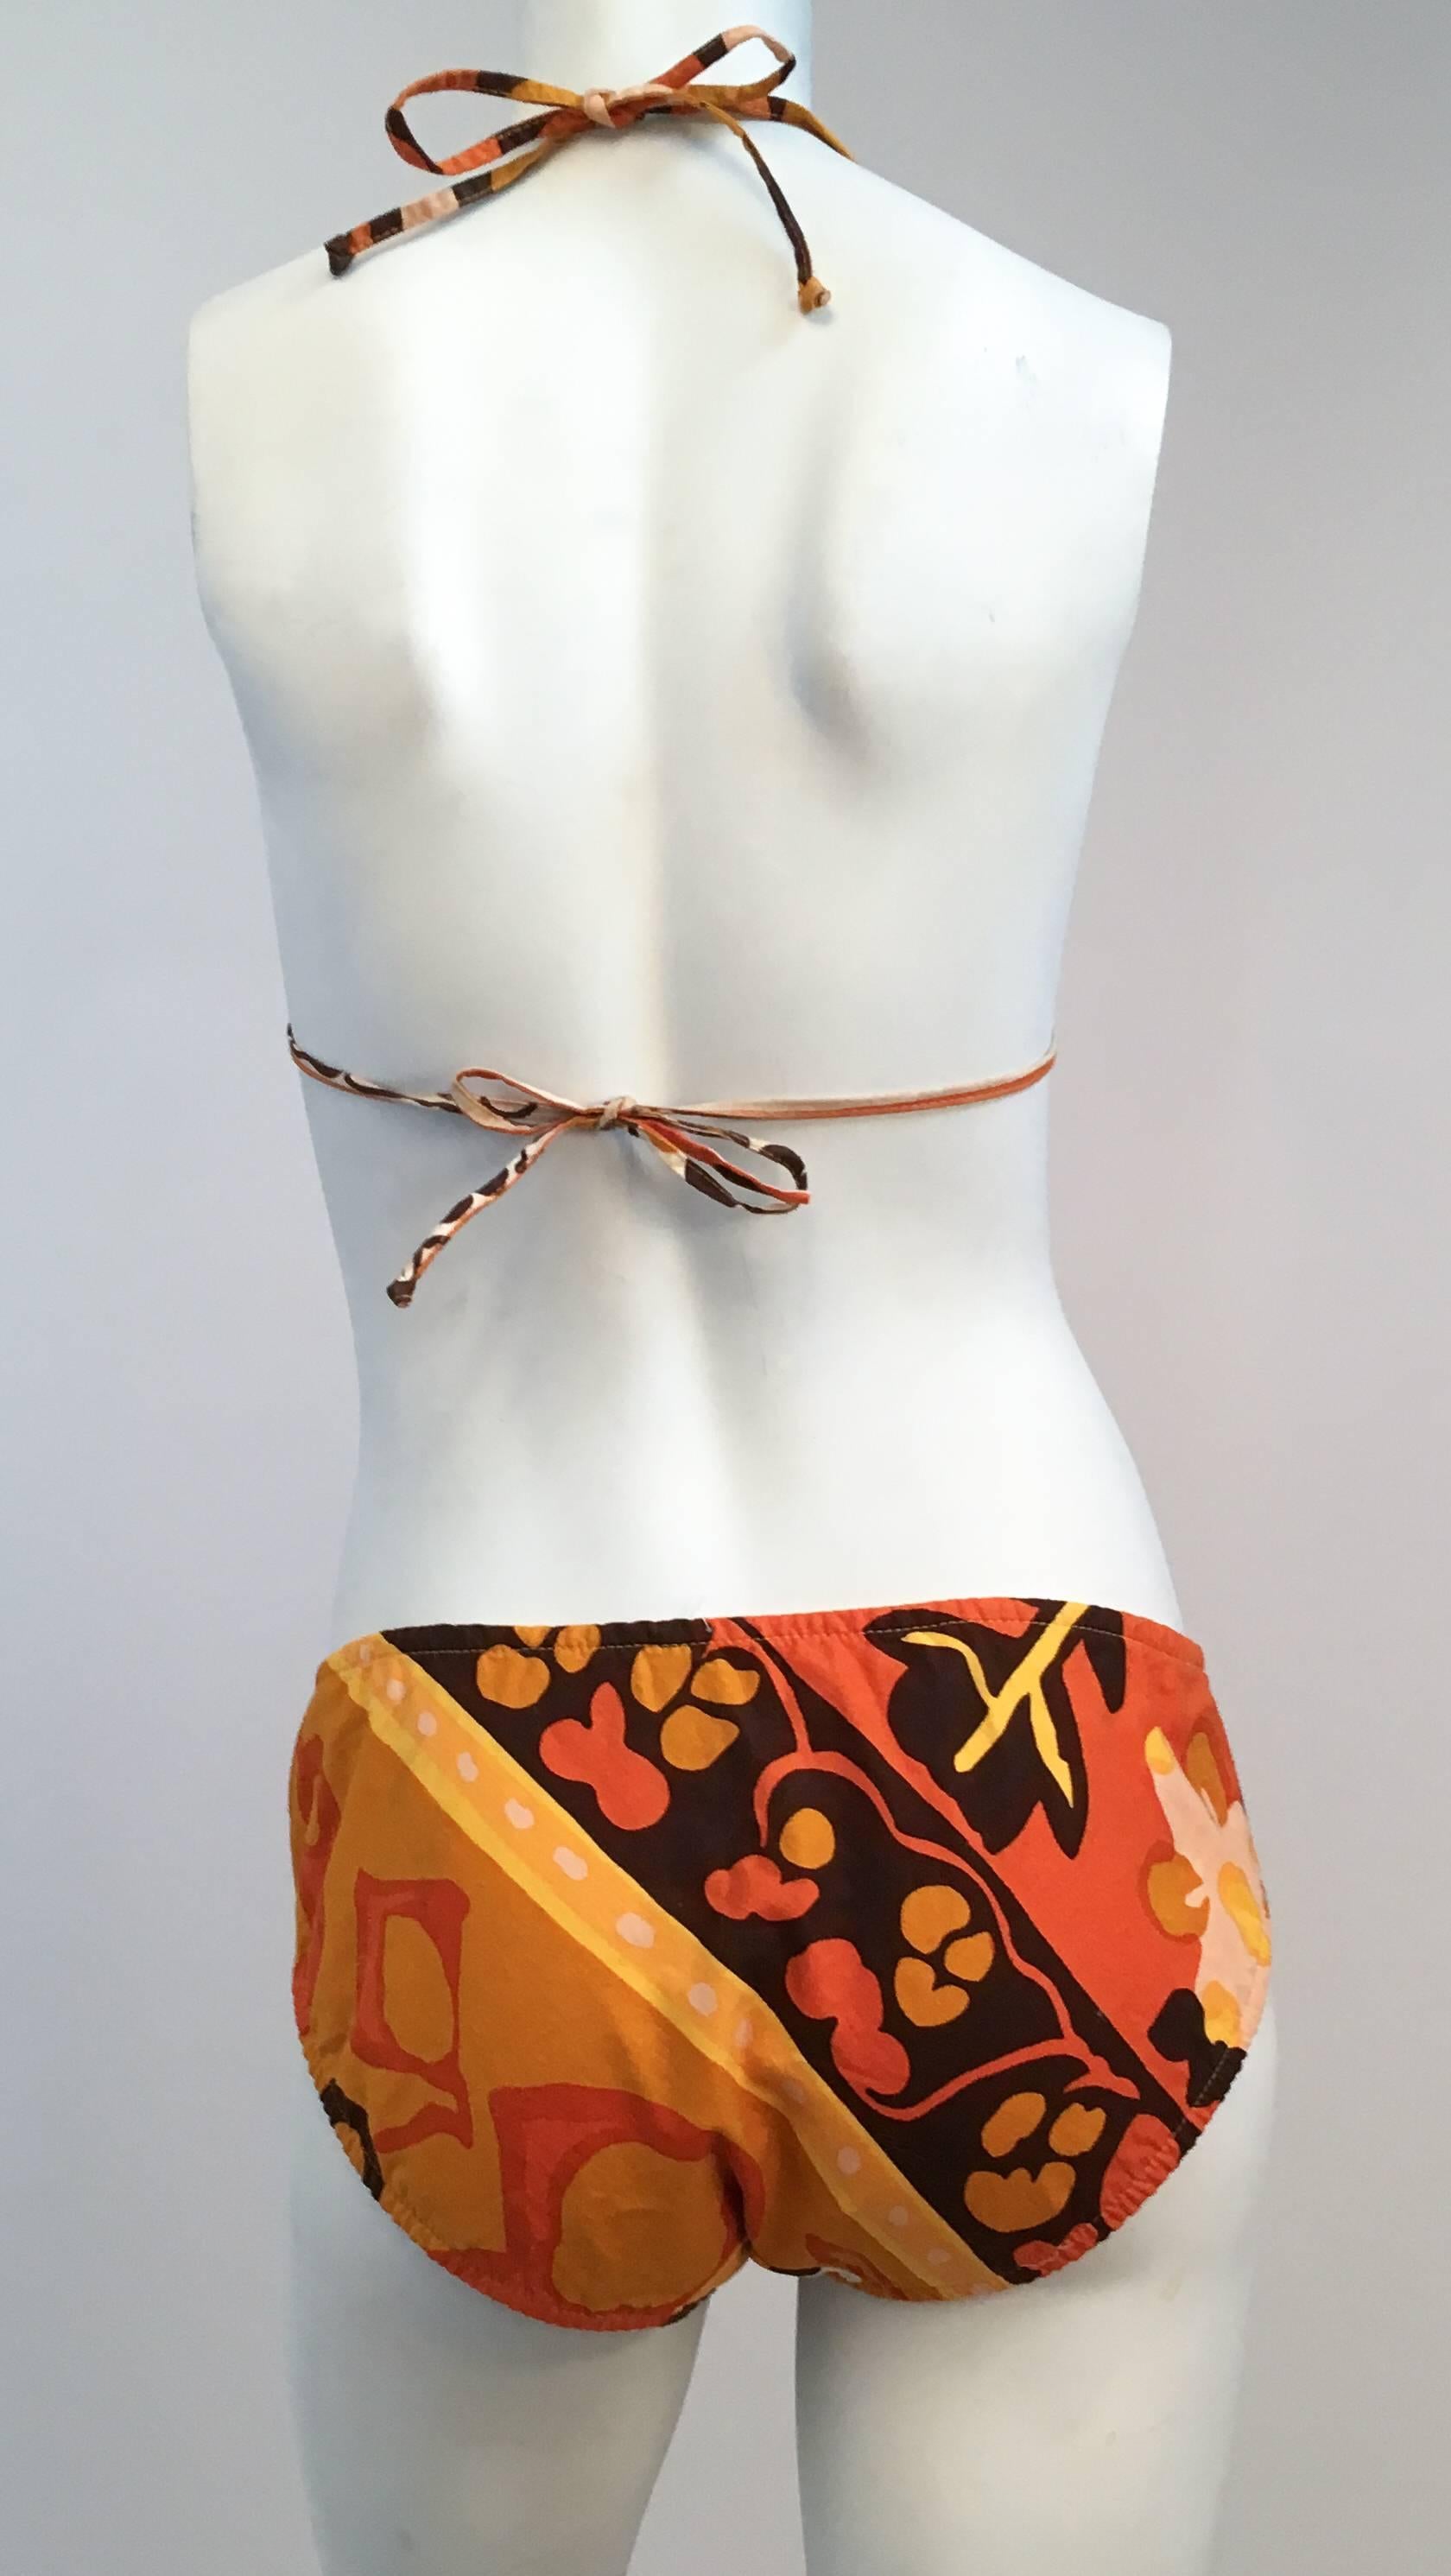 60s Orange Flower Print Cotton String Bikini. Fully lined. Size 6.